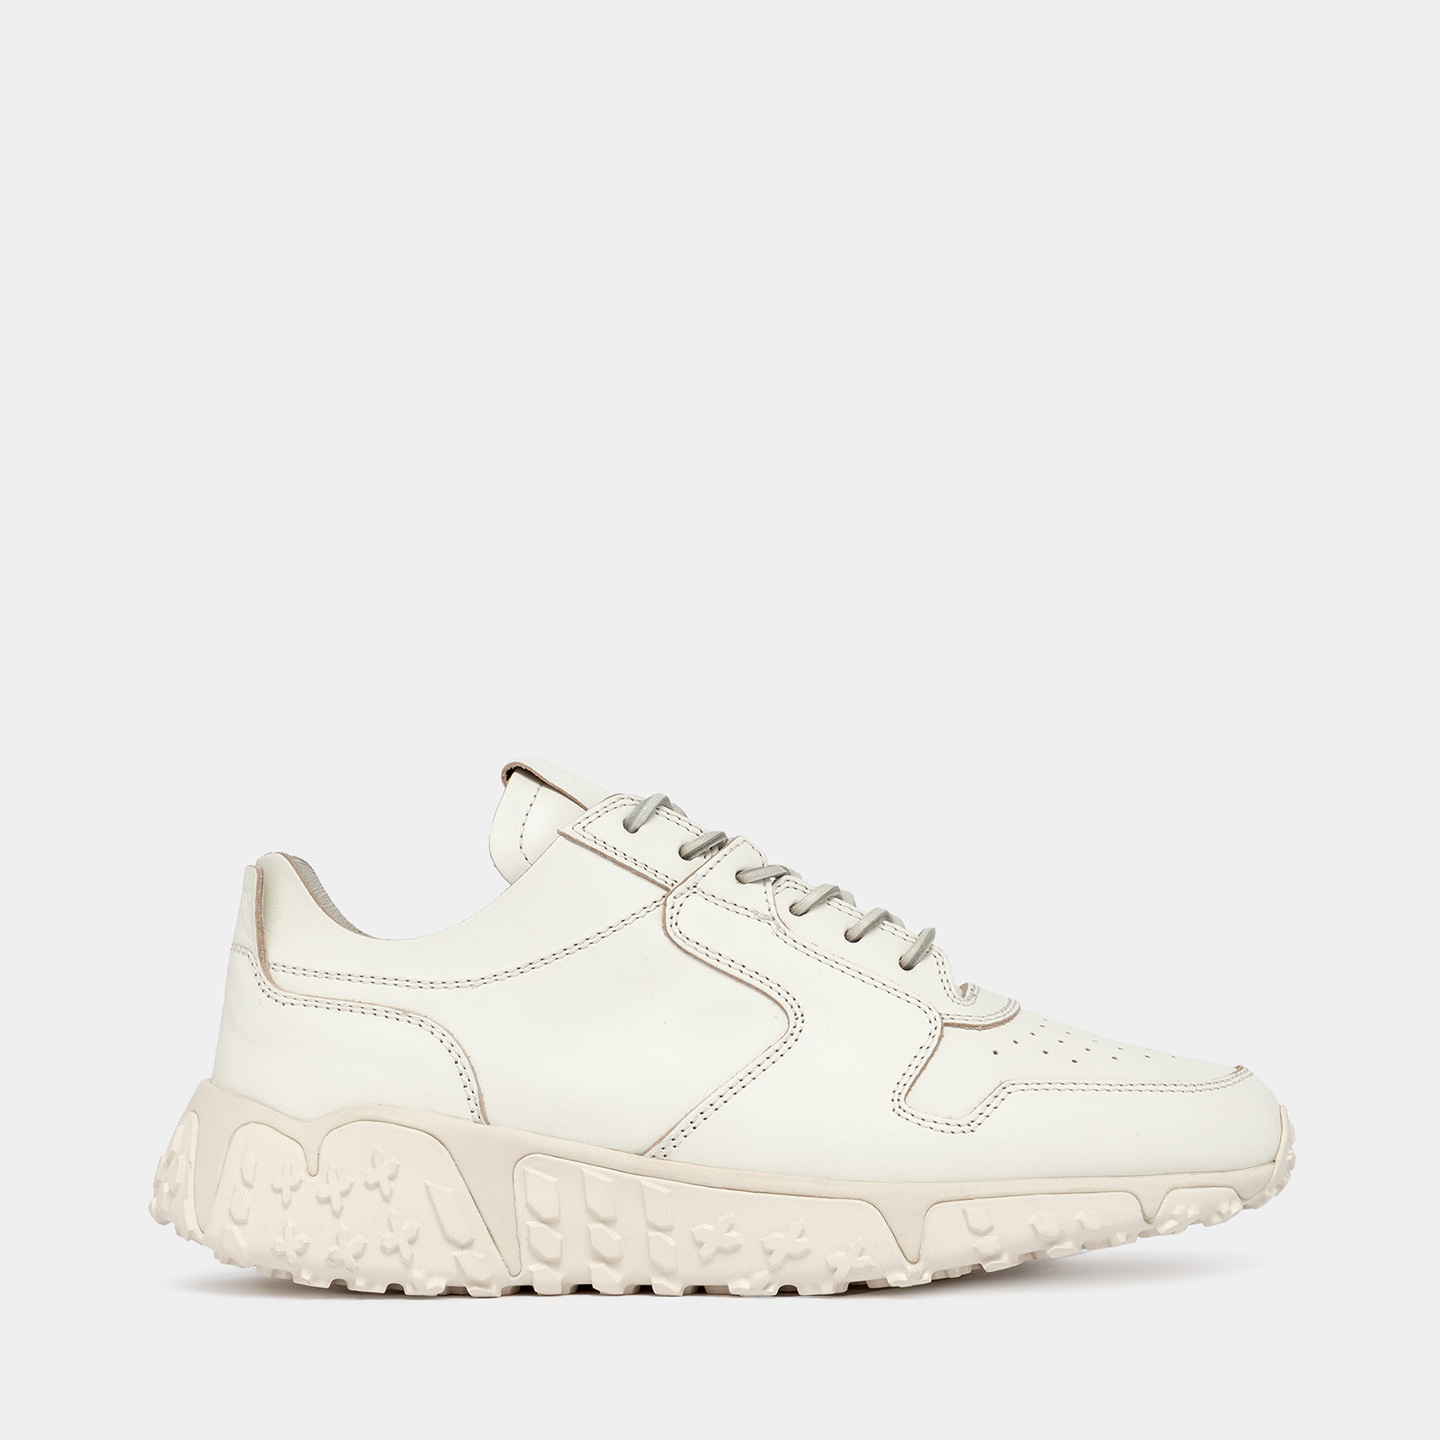 Louis Vuitton White Leather/Suede Run Away Sneaker Size 8.5/39